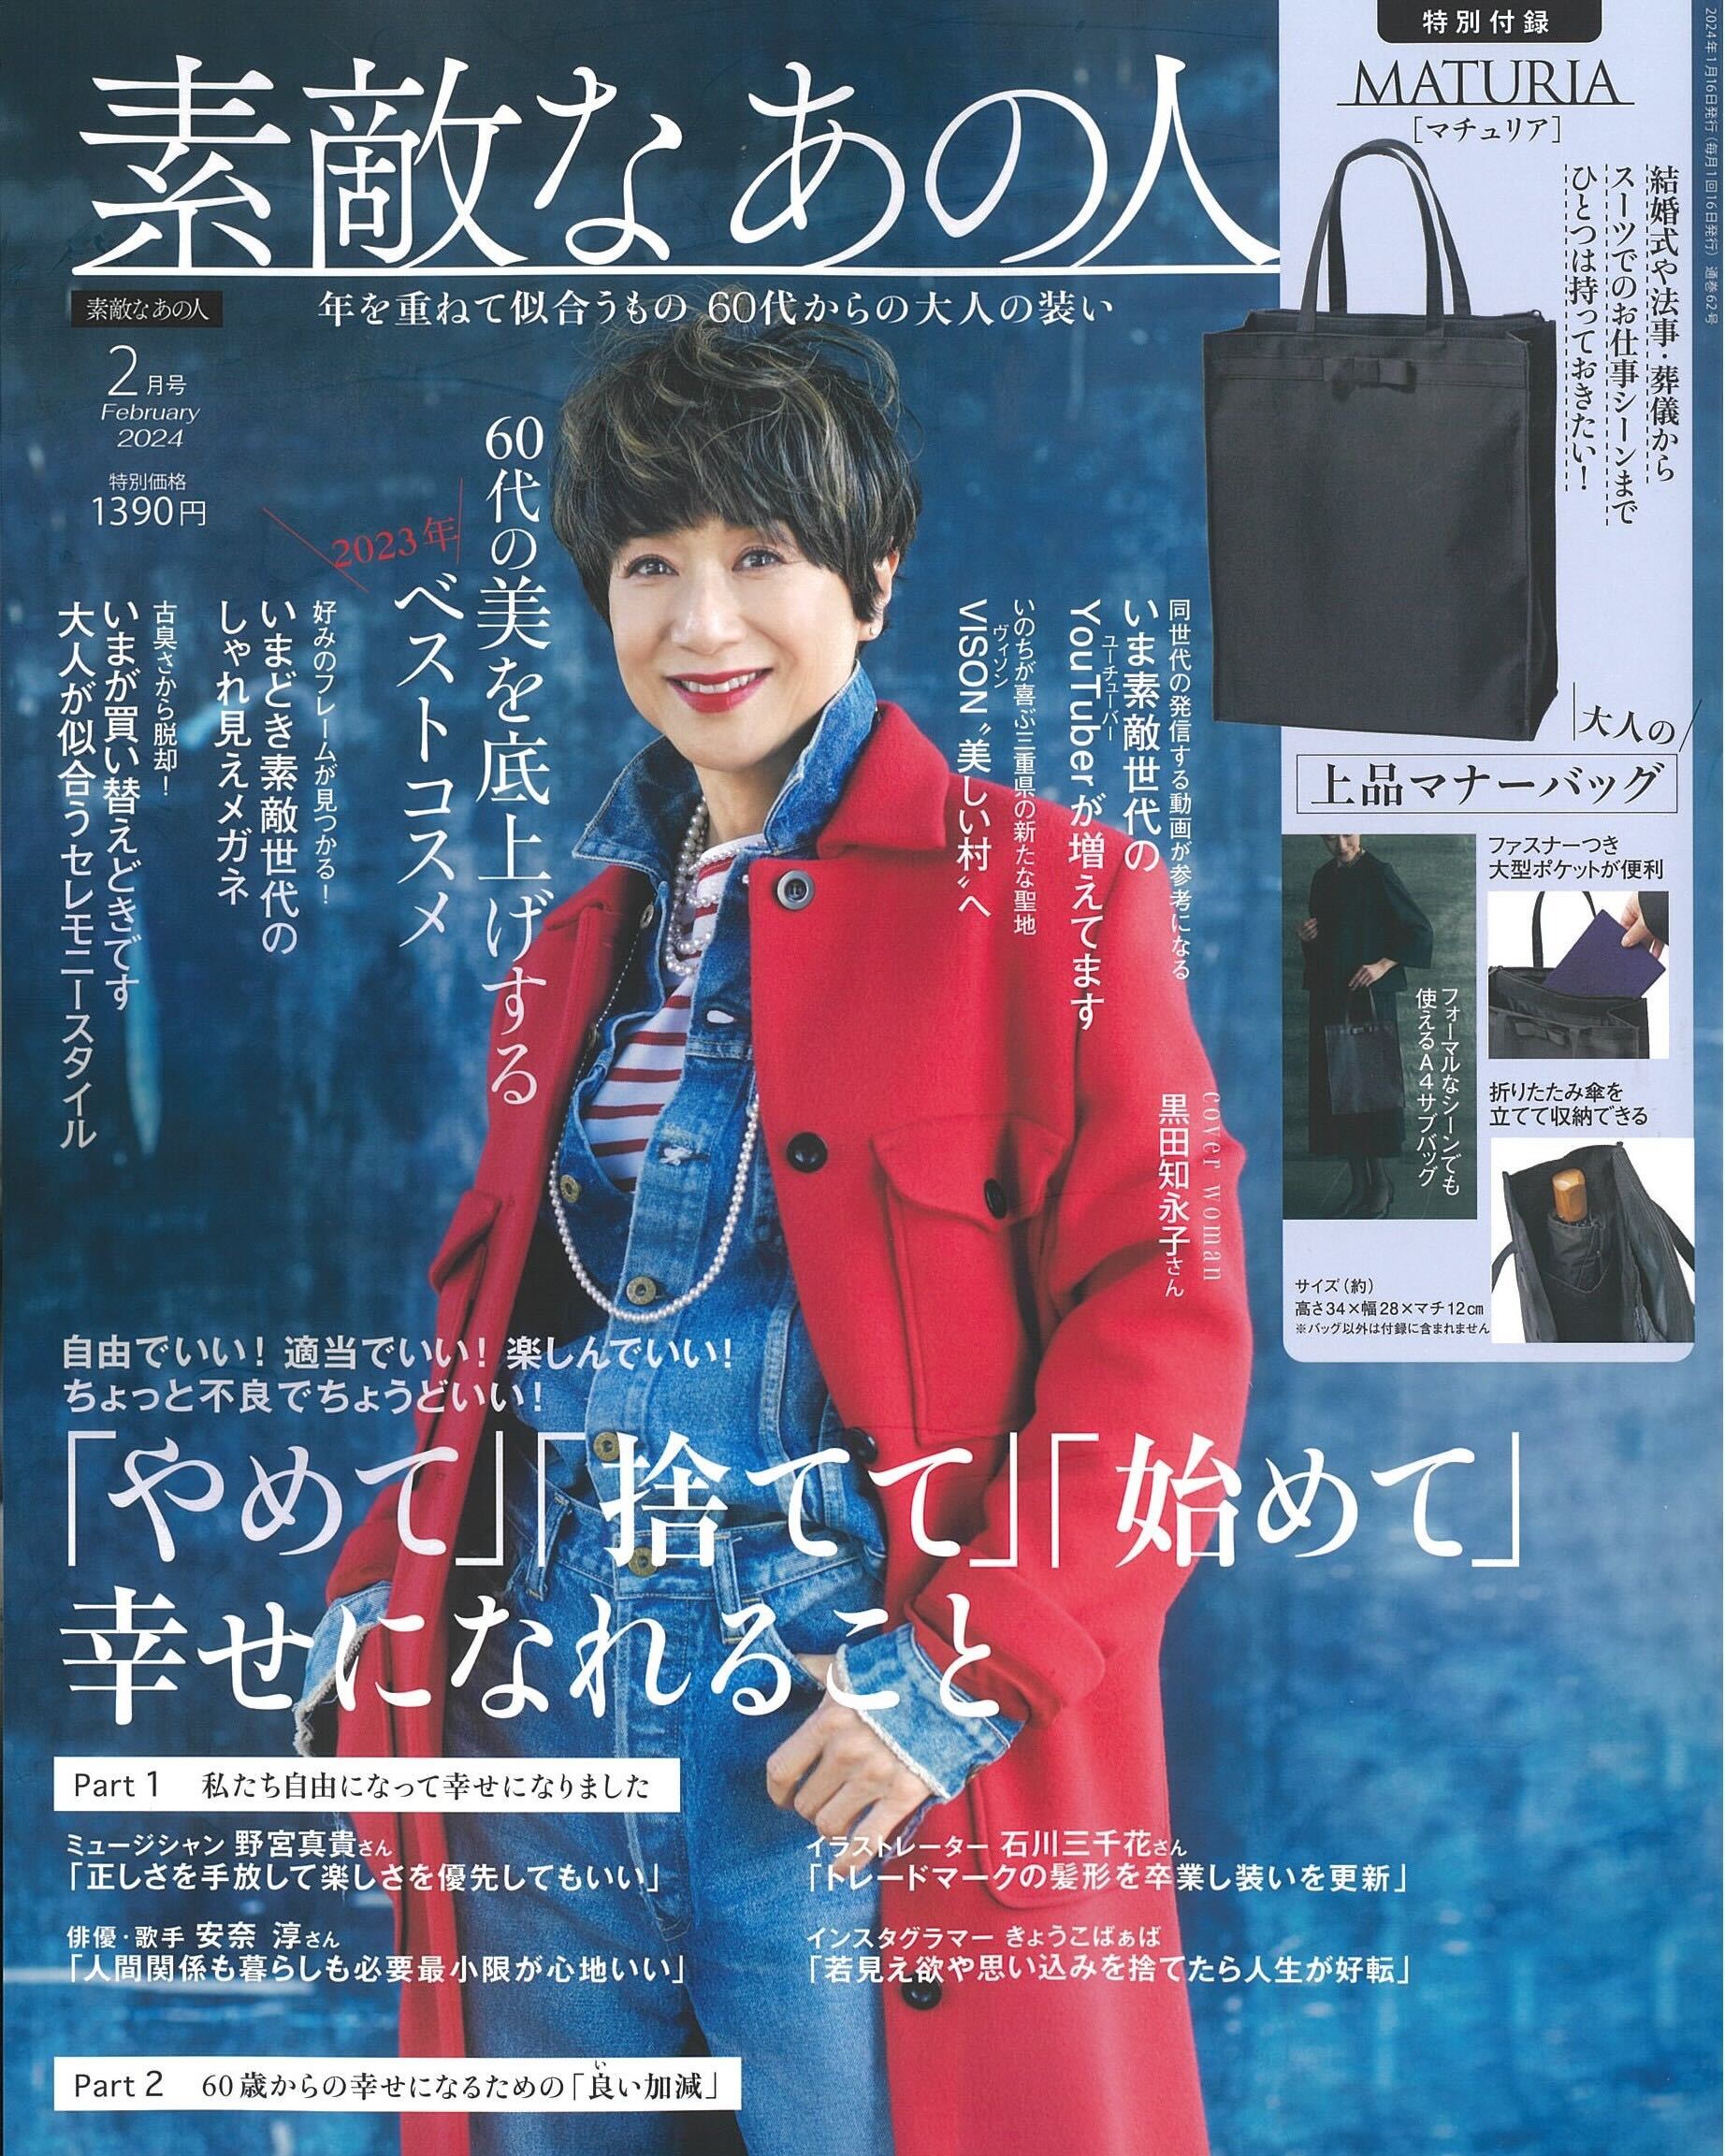 Launer London handbag is introduced in 『Suteki na anohito』 magazine.